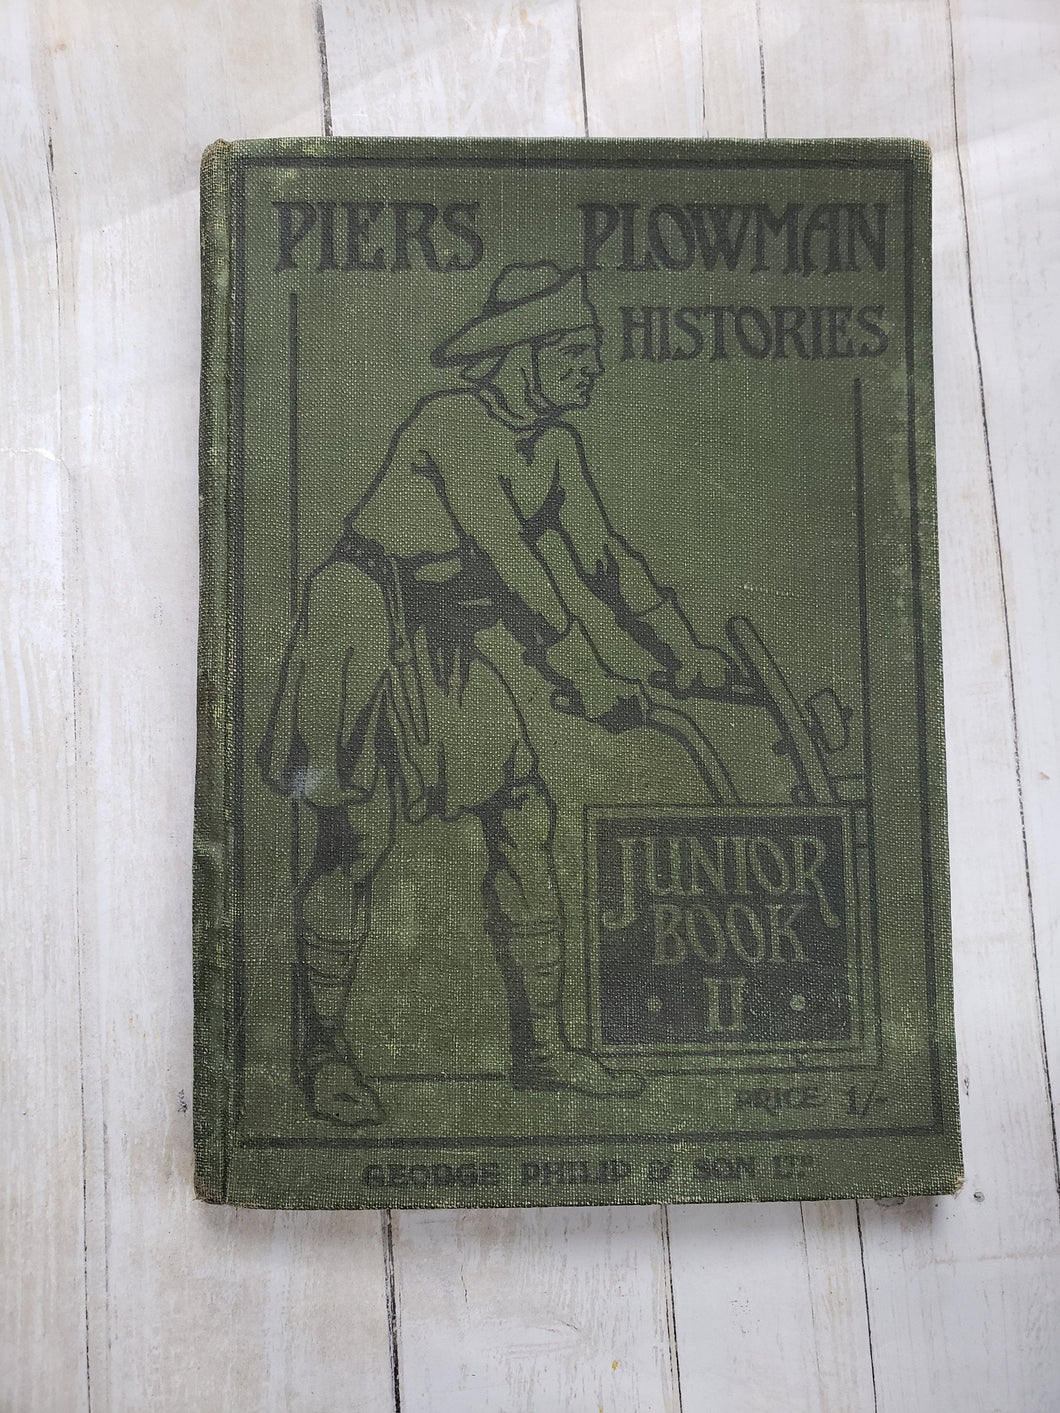 Piers Plowman Histories, Greek Roman and Old English History , 1900s, Colour Plates, colour plates, vintage school book, antique history